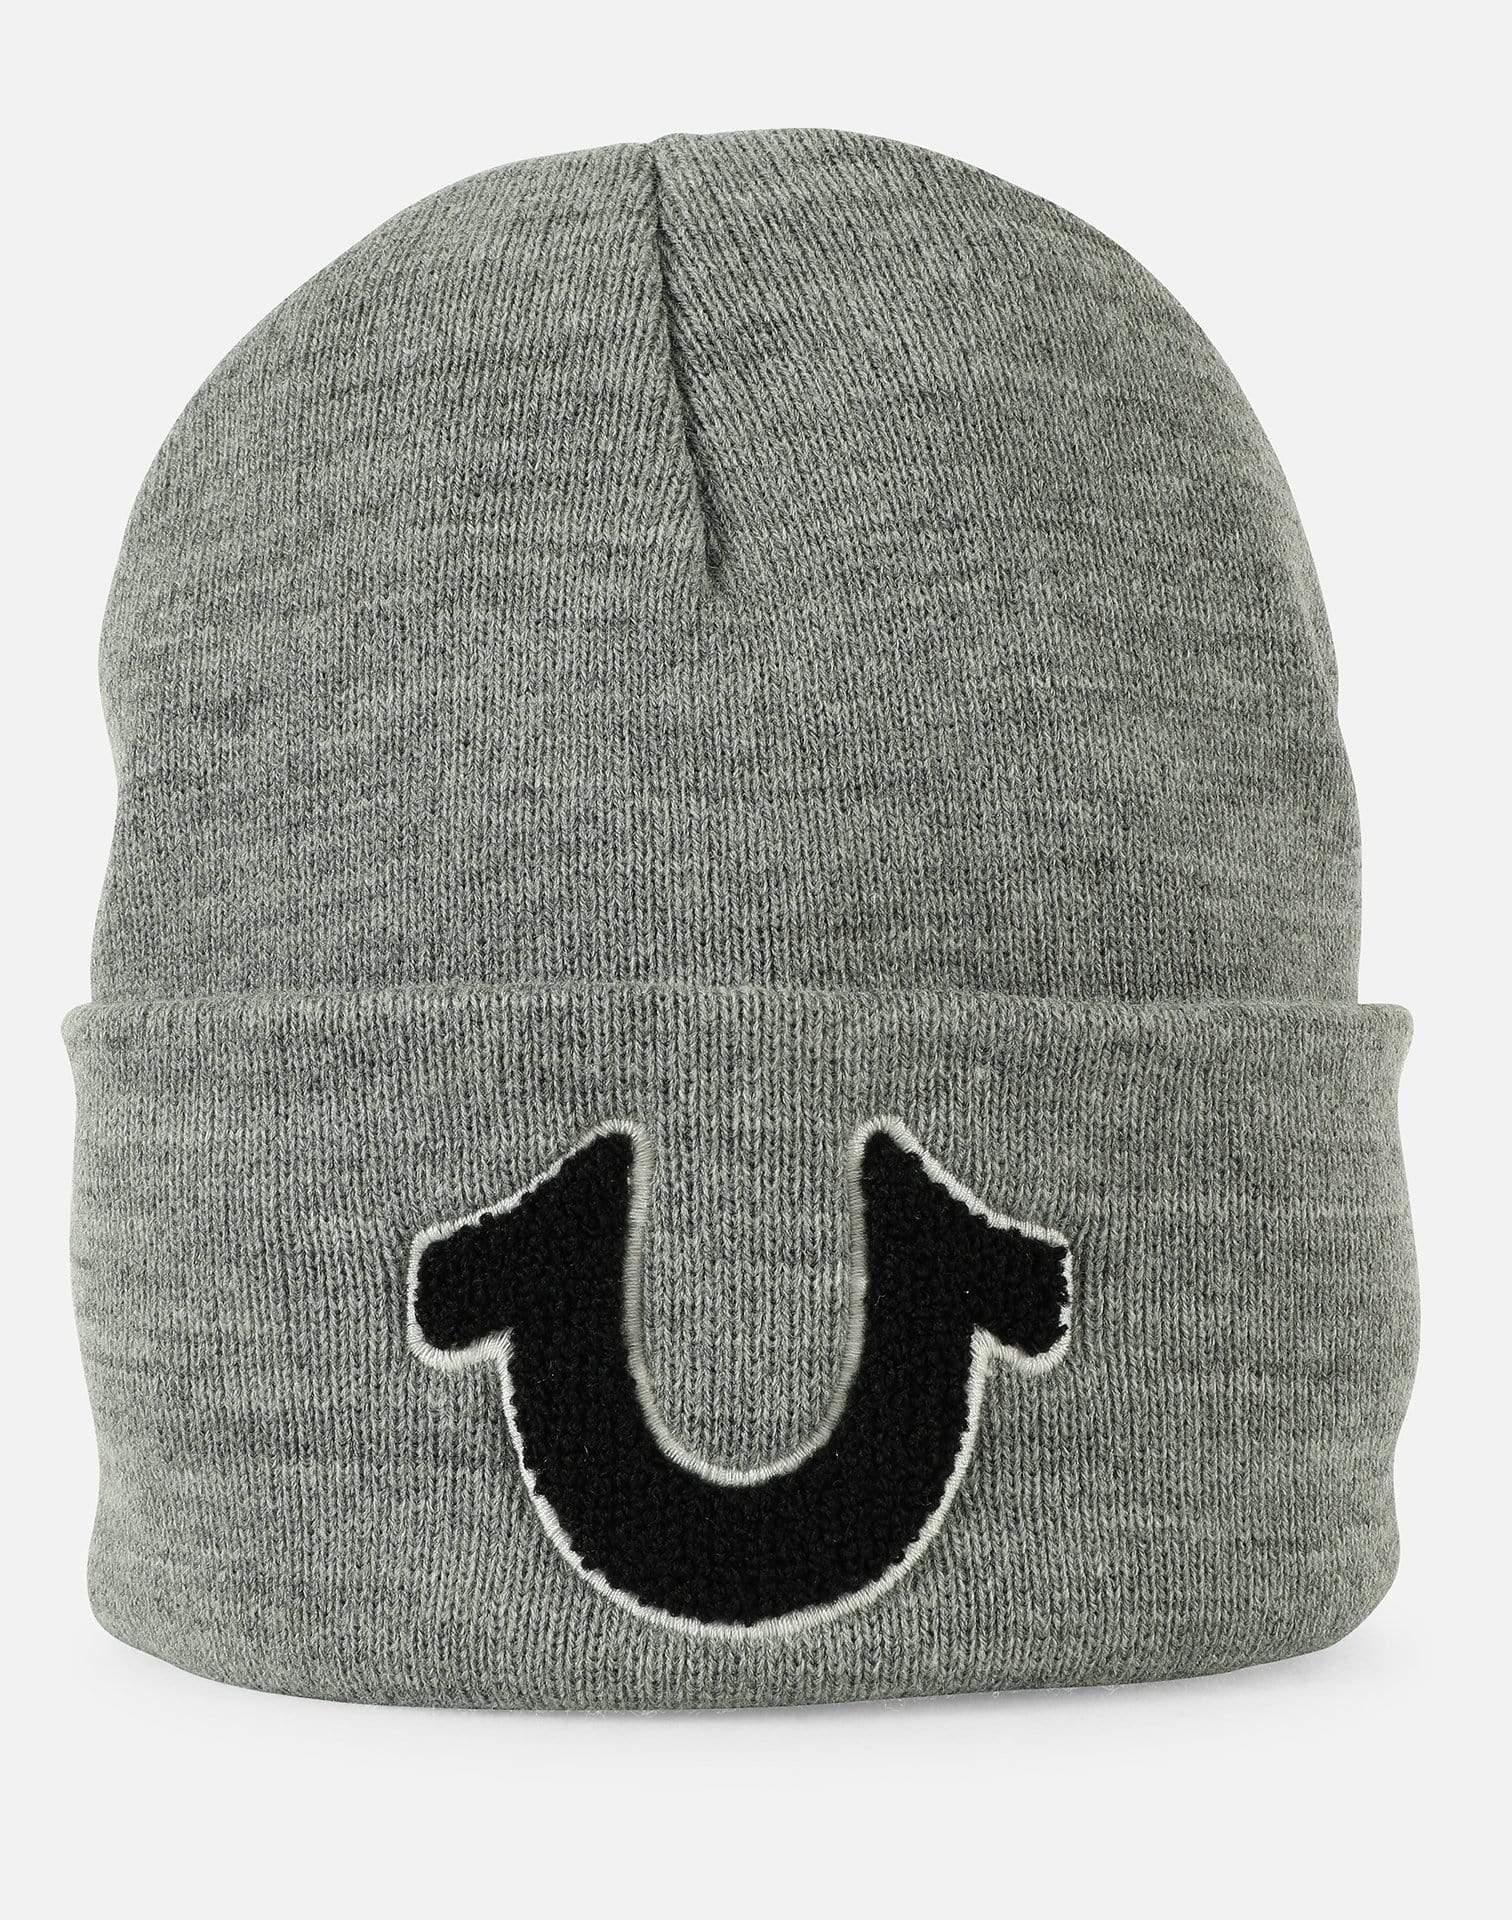 true religion knit hat